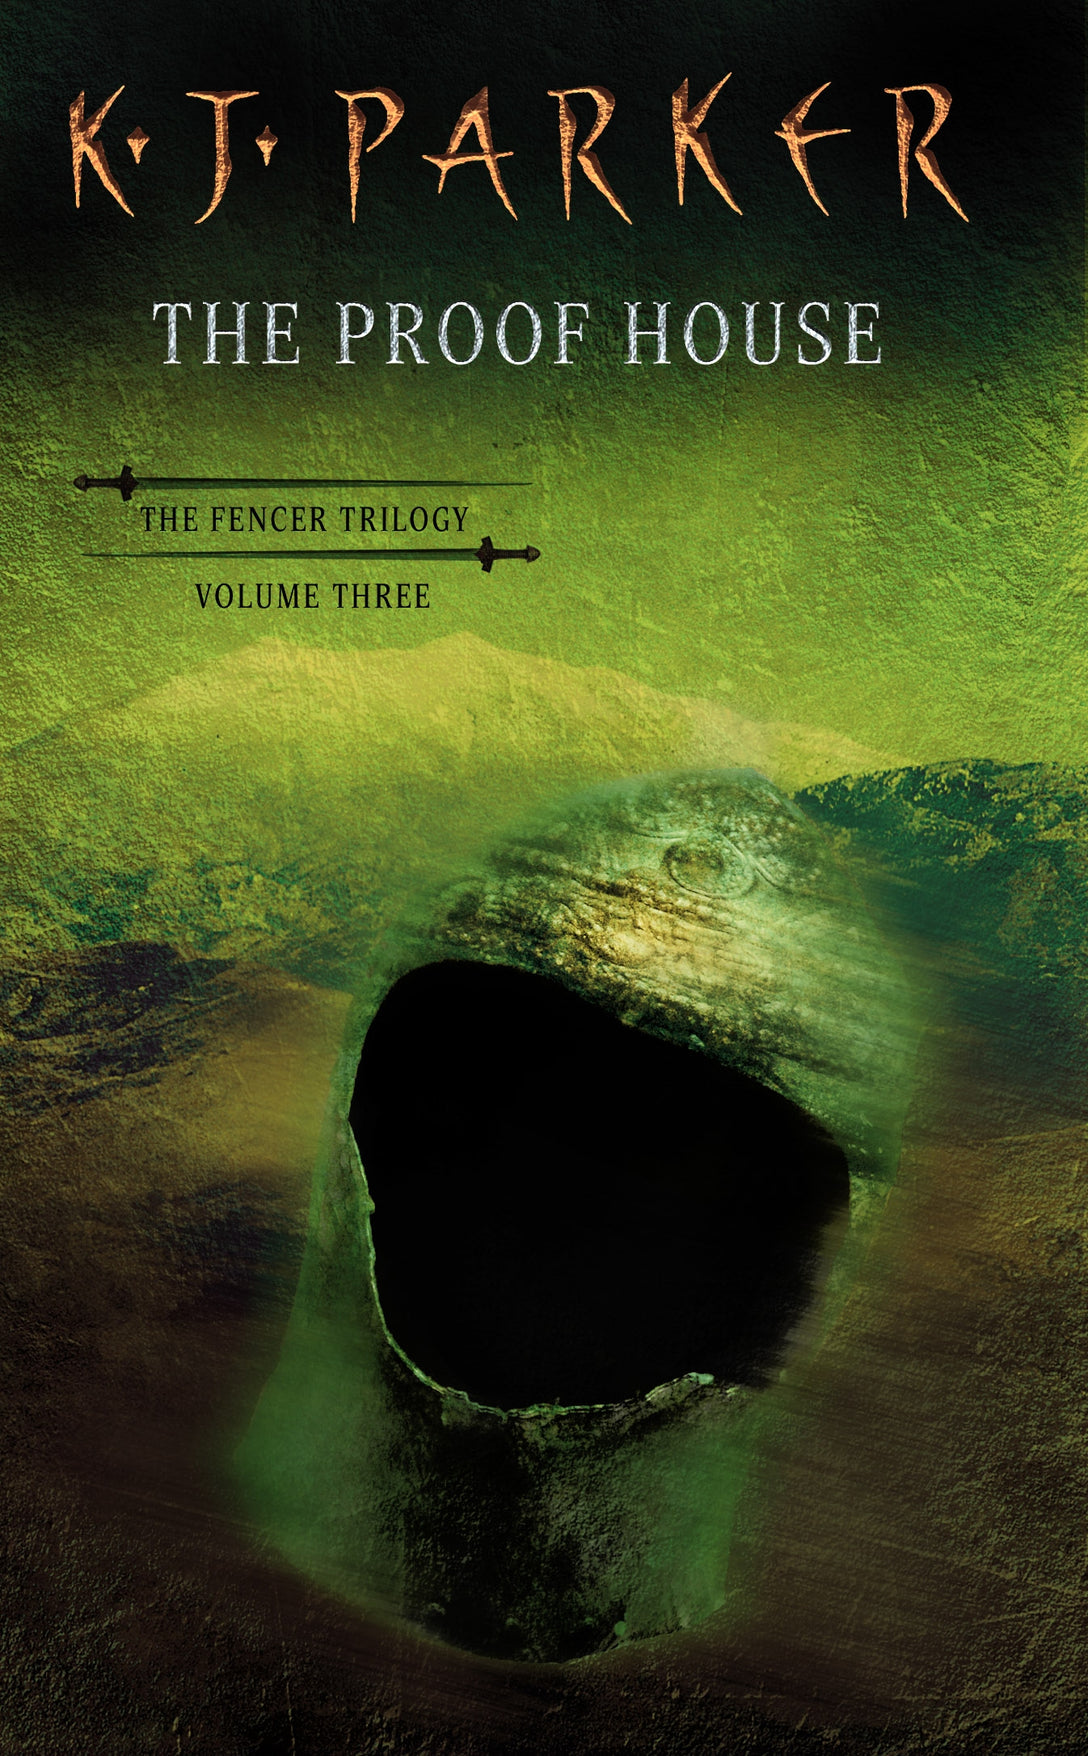 The Proof House by K. J. Parker